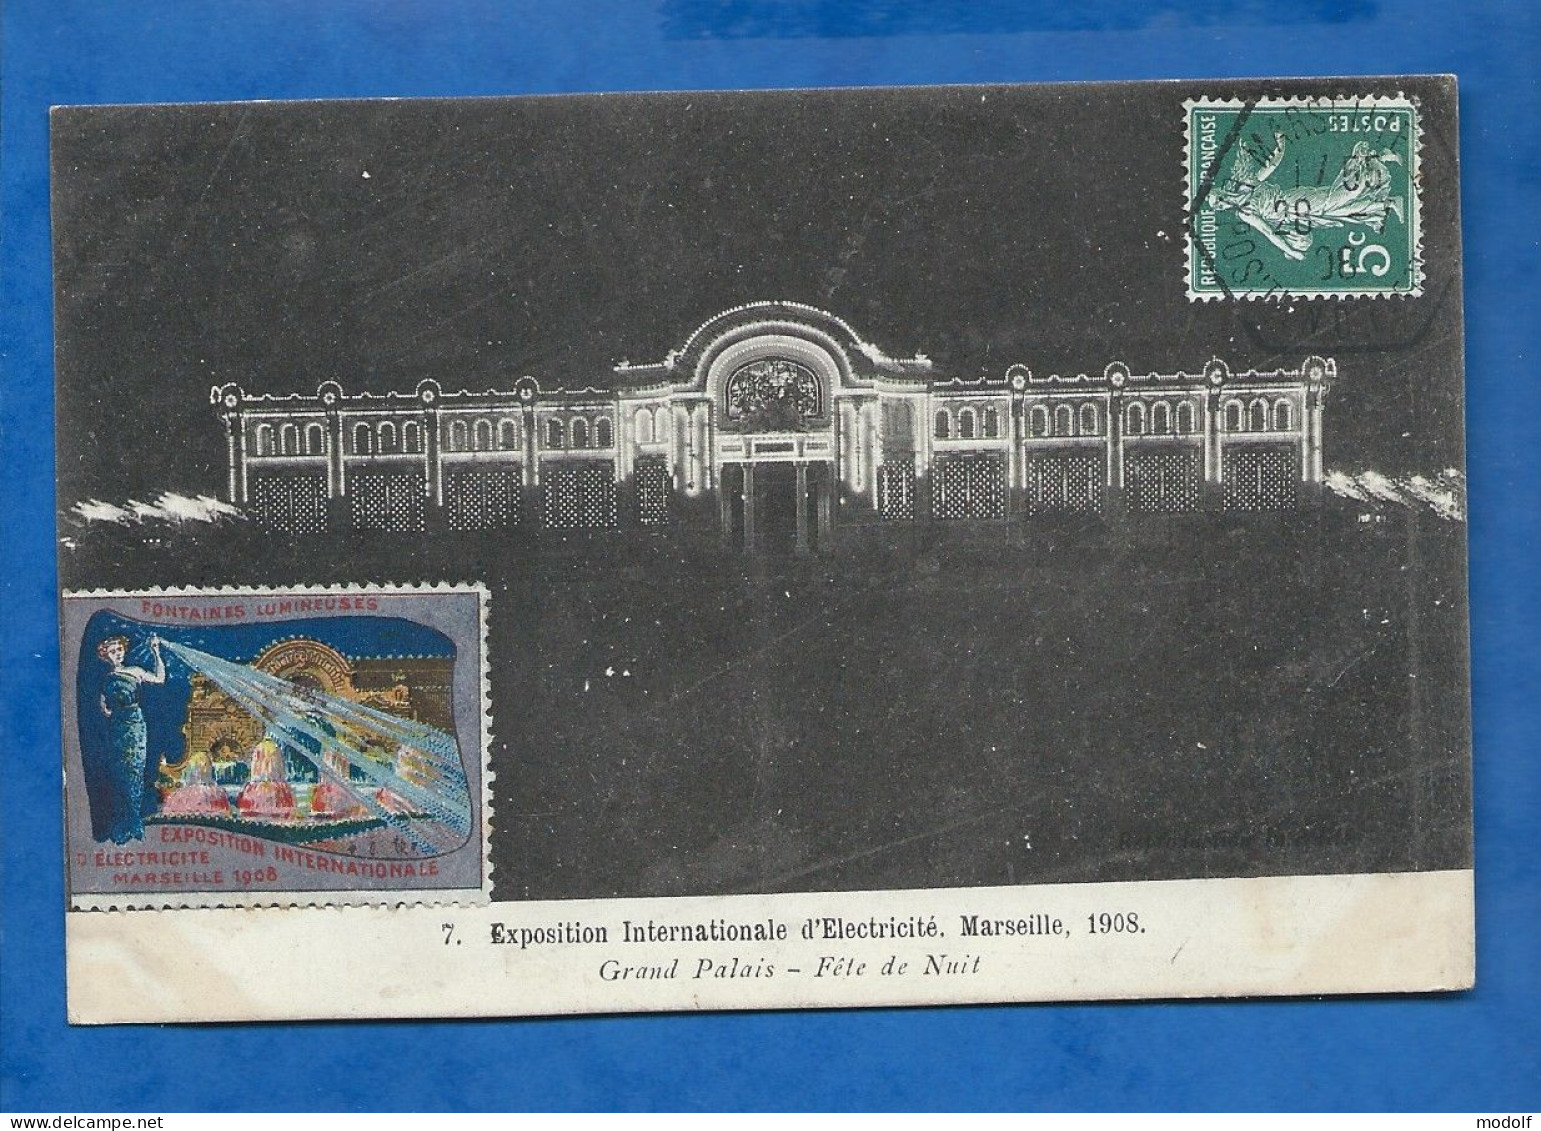 CPA - 13 - Marseille - Exposition Internationale D'Electricité - Grand Palais - Fête De Nuit - Circulée En 1908 - Weltausstellung Elektrizität 1908 U.a.